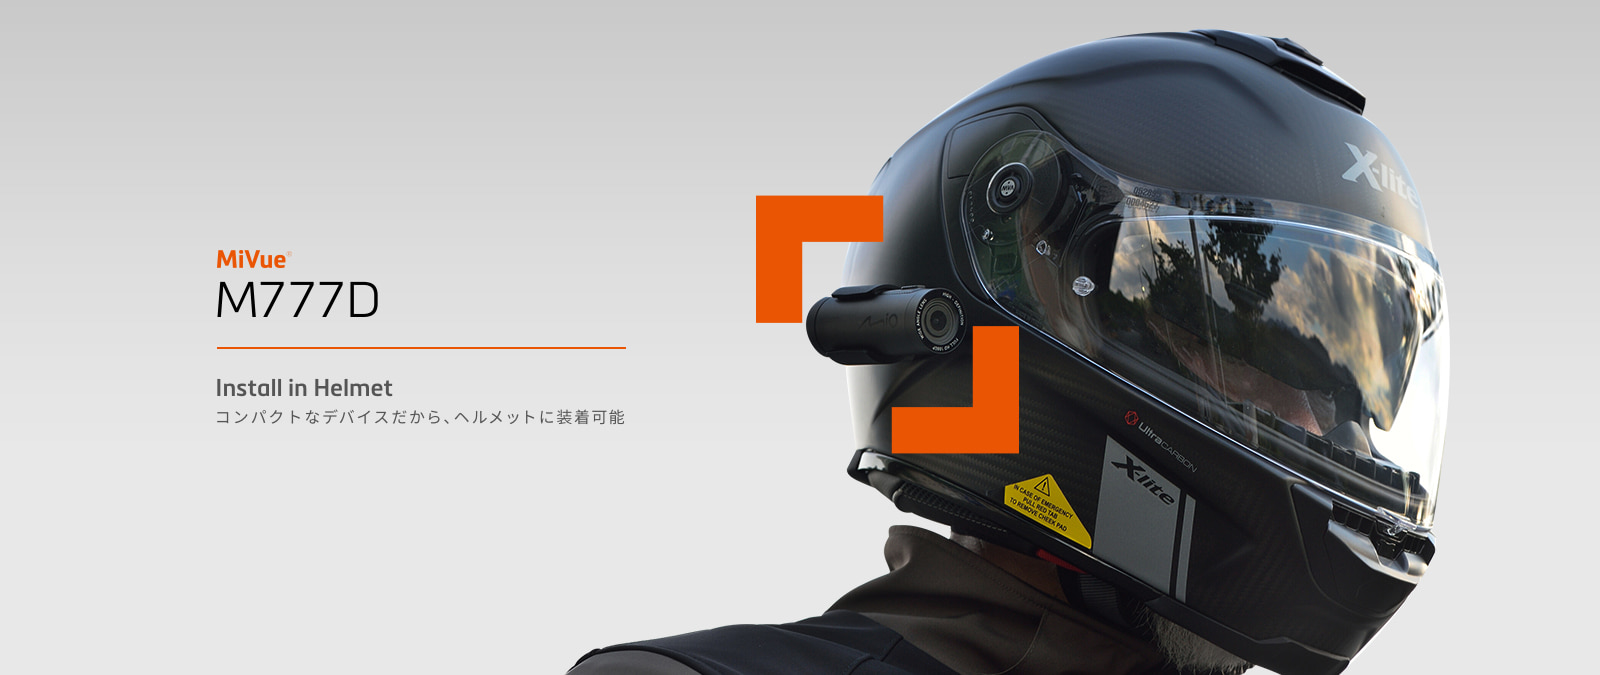 MiVue M777D「Install in Helmet」コンパクトなデバイスだから、ヘルメットに装着可能